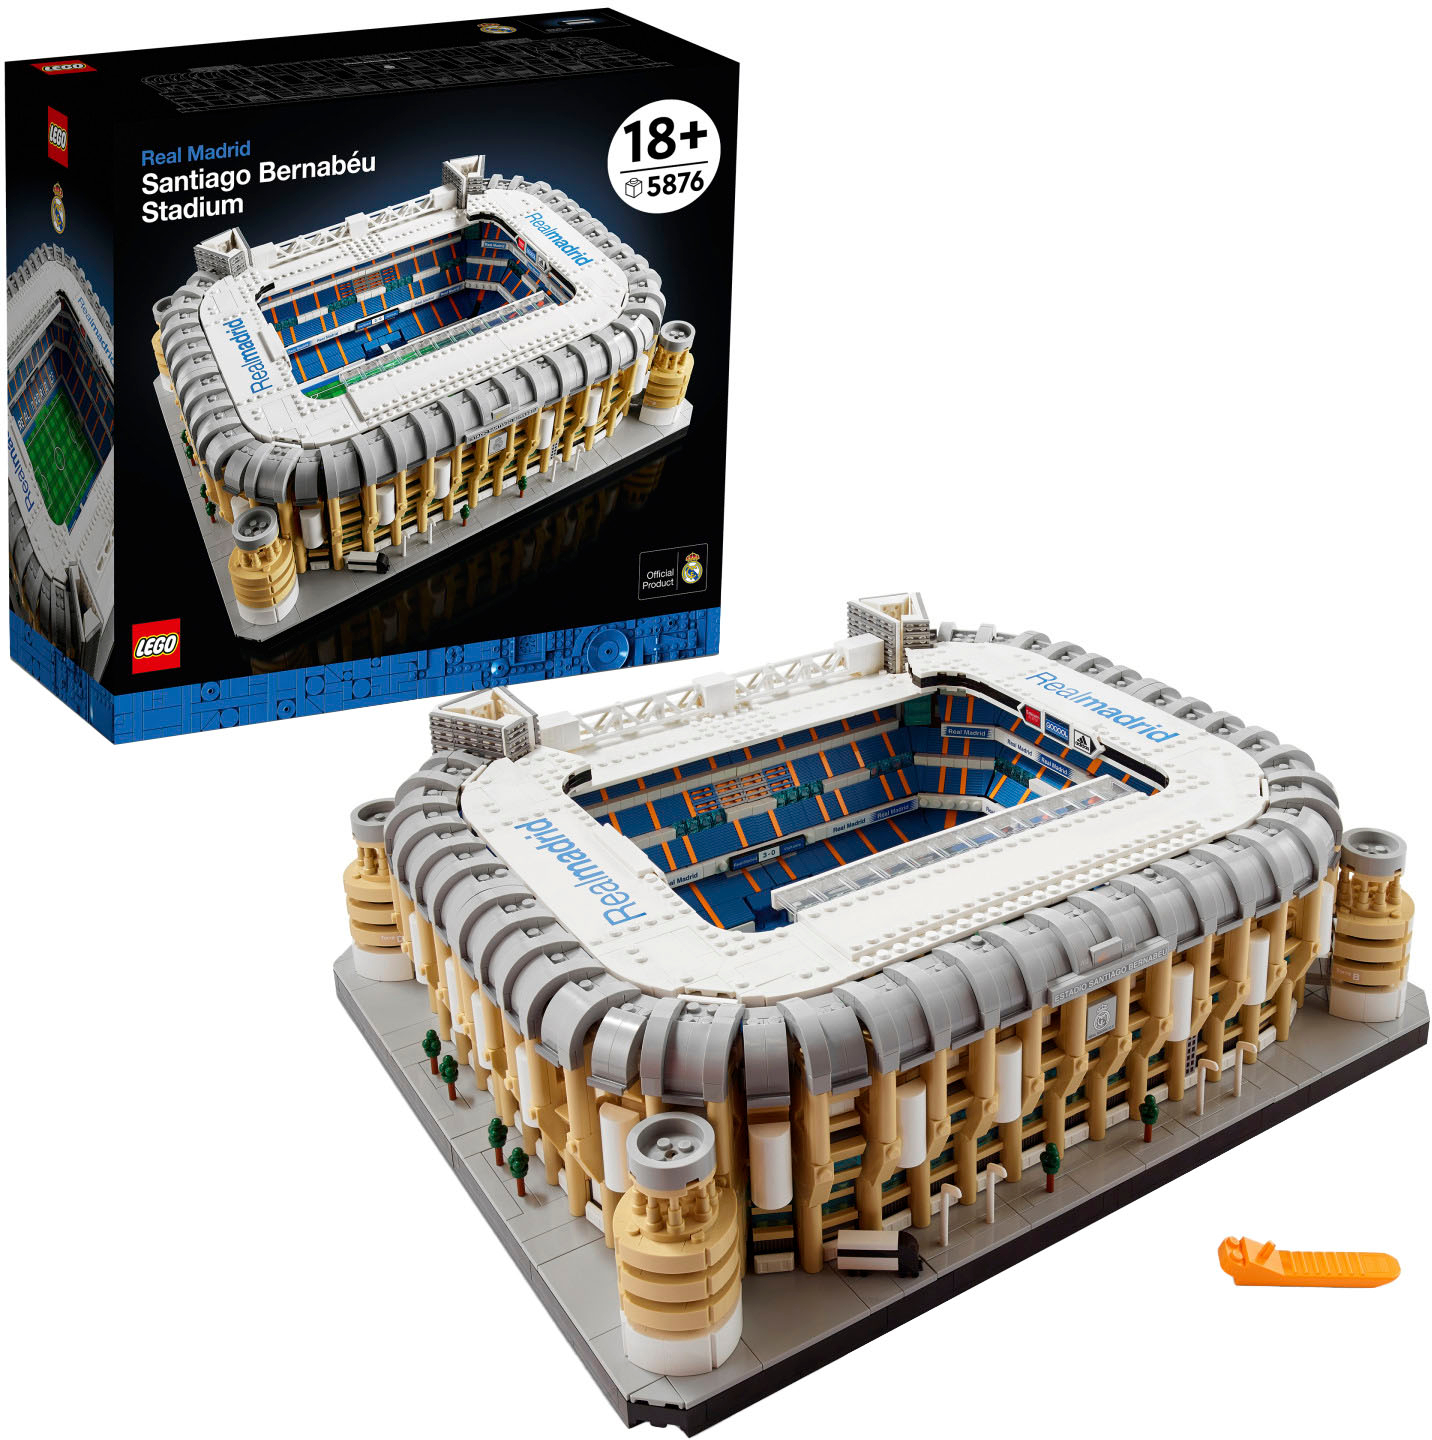 LEGO Real Madrid Santiago Bernabu Stadium 10299 Toy Building Kit (5,876 Pieces) - Best Buy